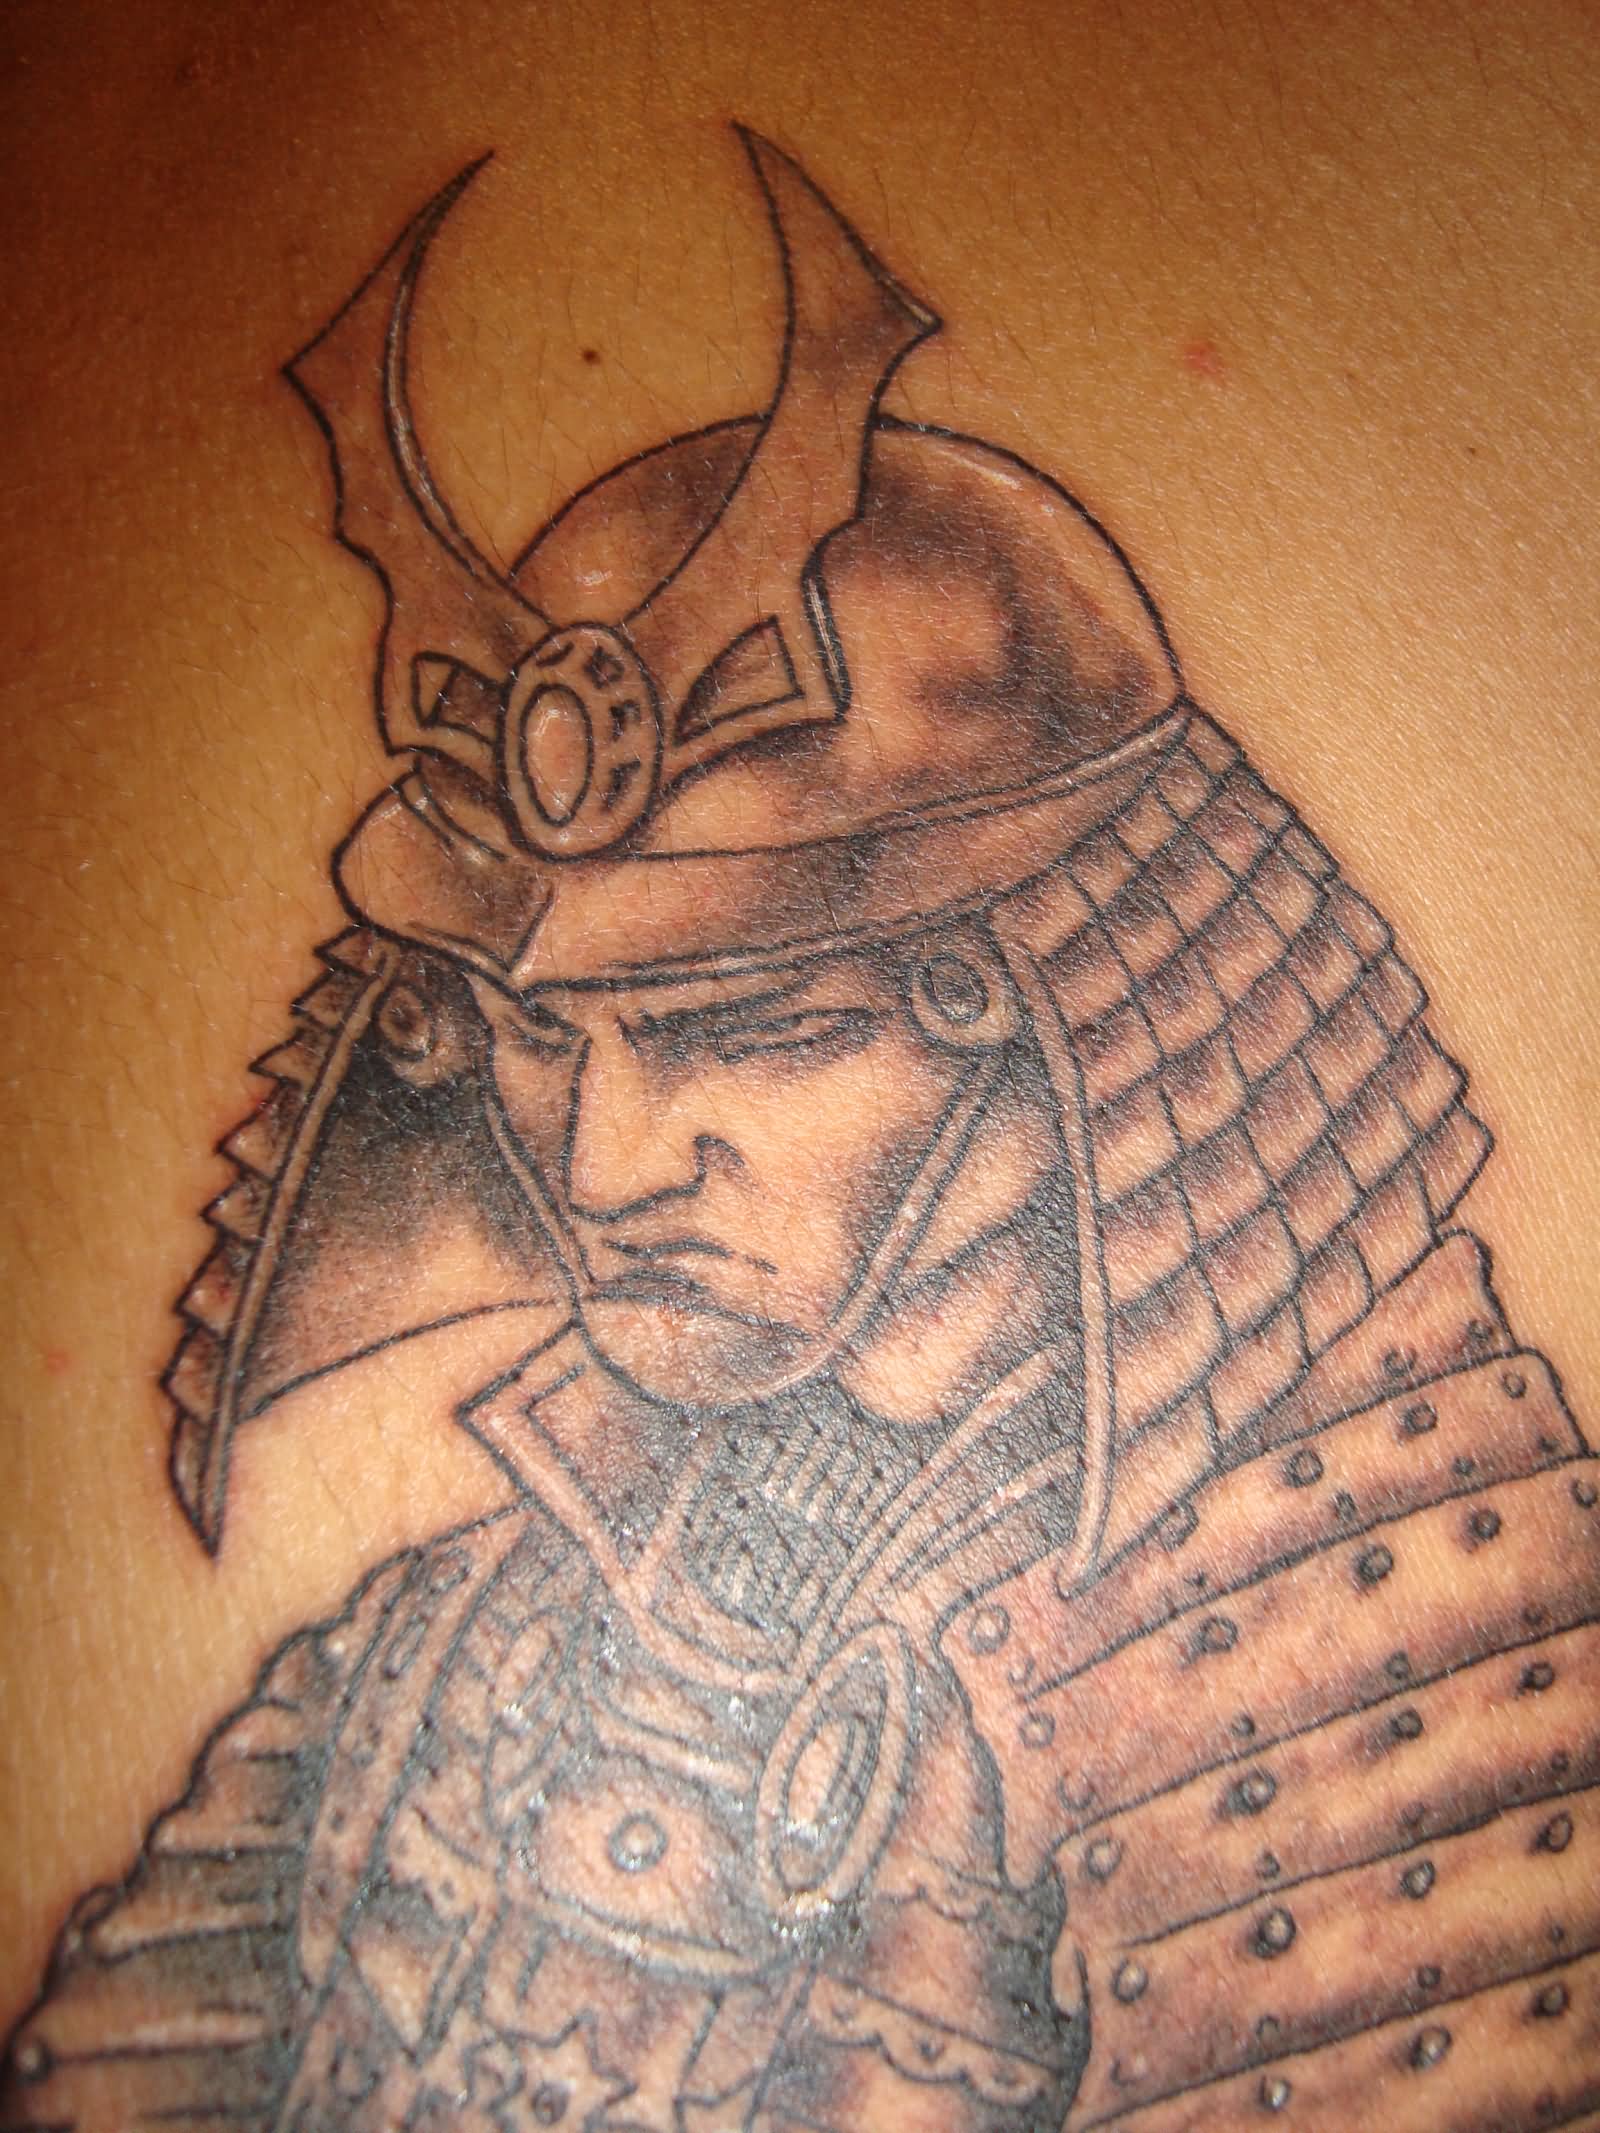 Samurai Warrior Tattoo